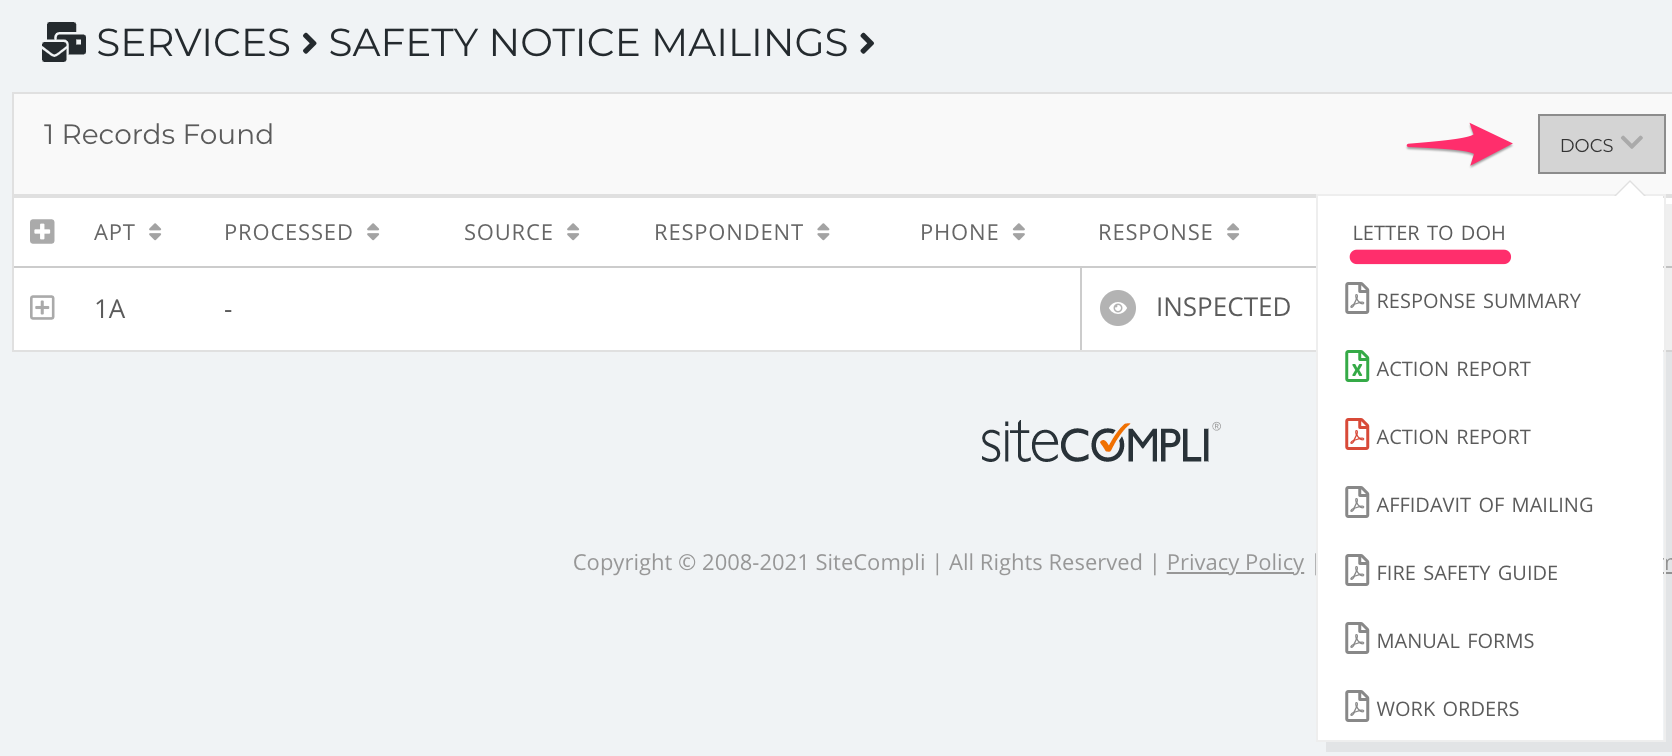 SiteCompli___Safety_Notice_Mailings___SiteCompli1.png